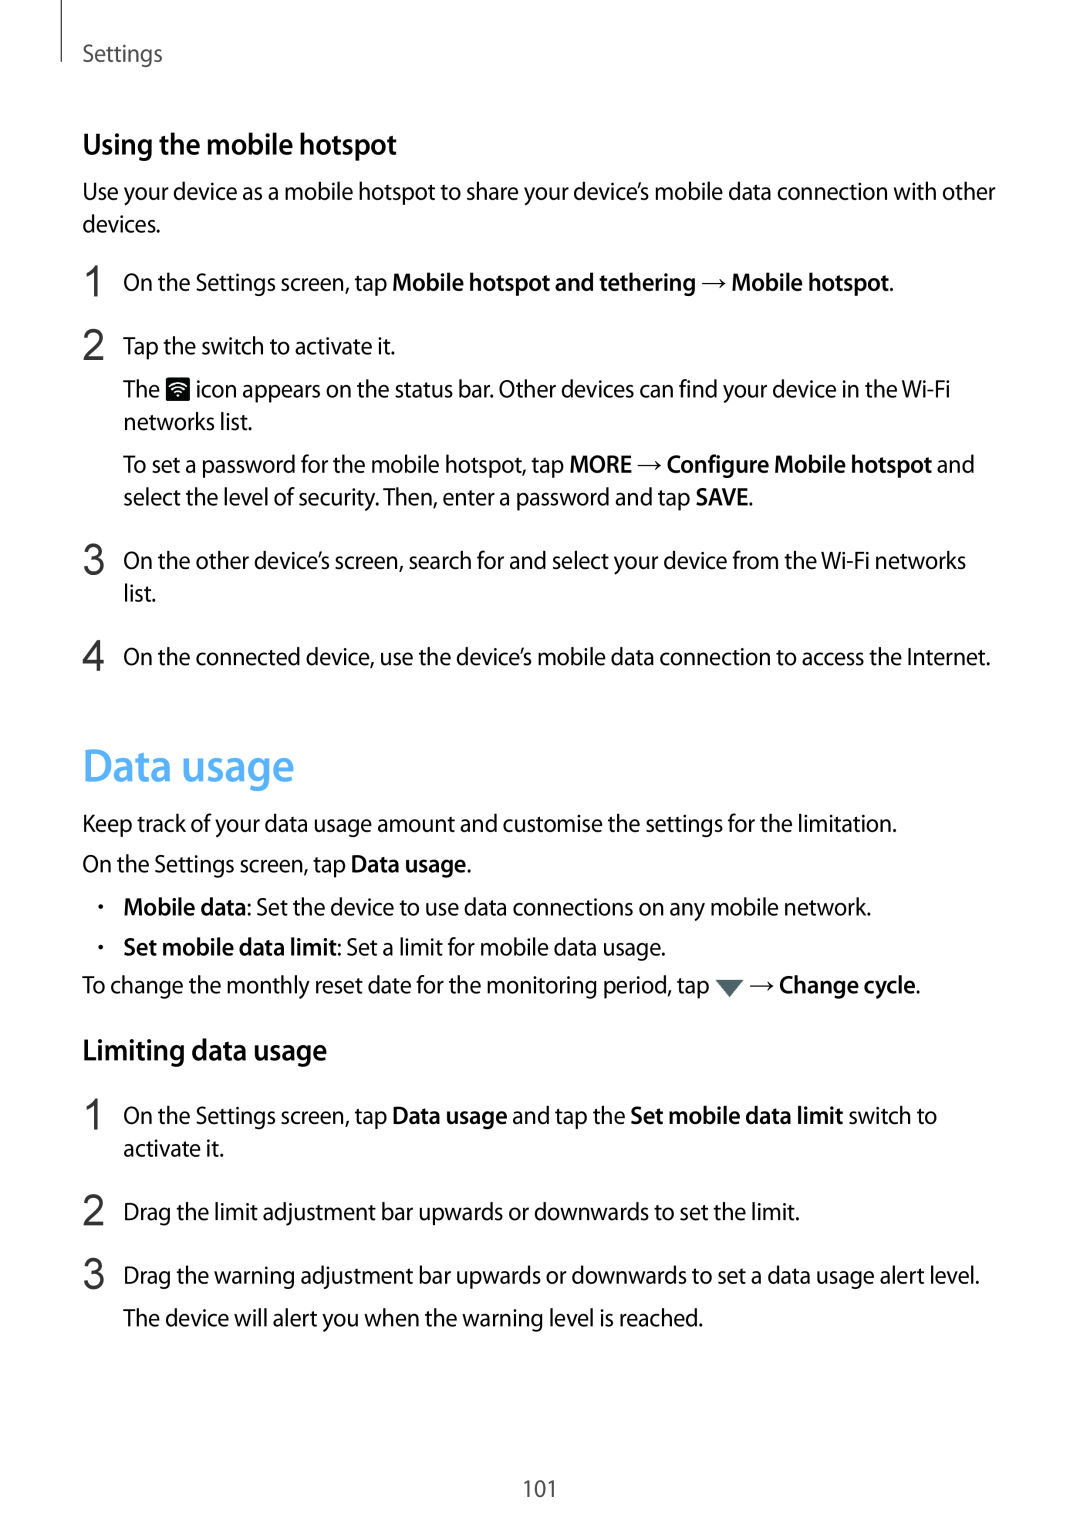 Samsung SM-G920FZDAXXV, SM-G920FZKFDBT, SM-G920FZKEDBT Data usage, Using the mobile hotspot, Limiting data usage, Settings 